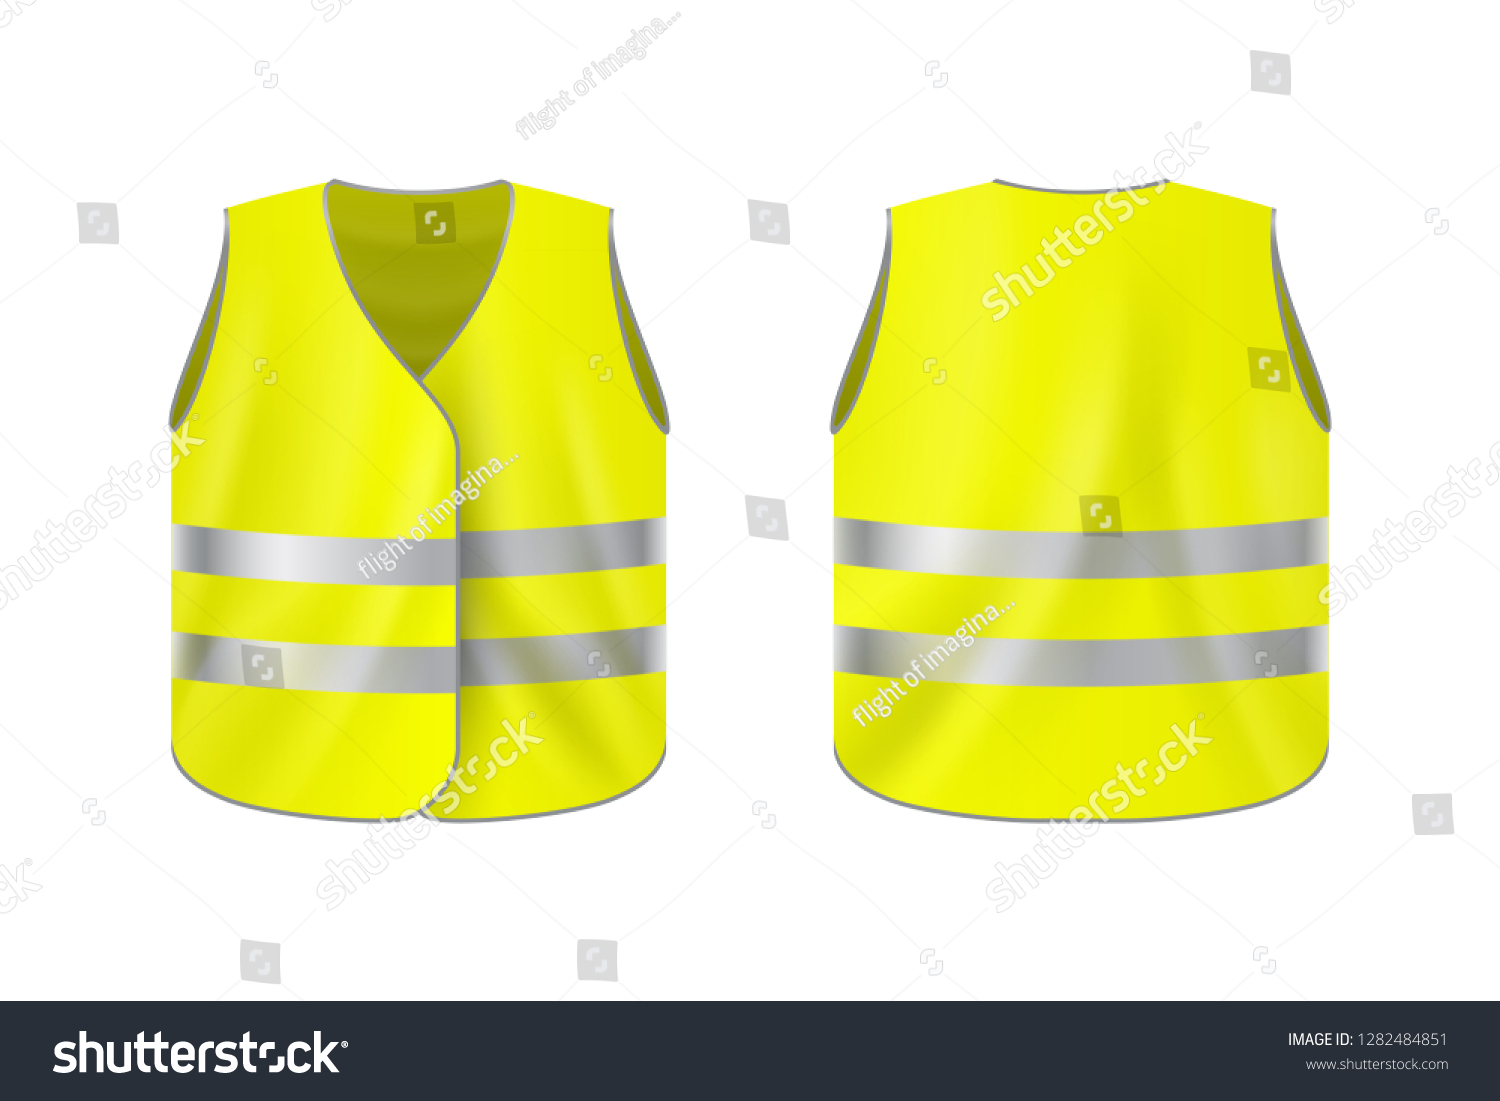 SVG of Realistic reflective vest, front and back view, safety jacket on plain background svg